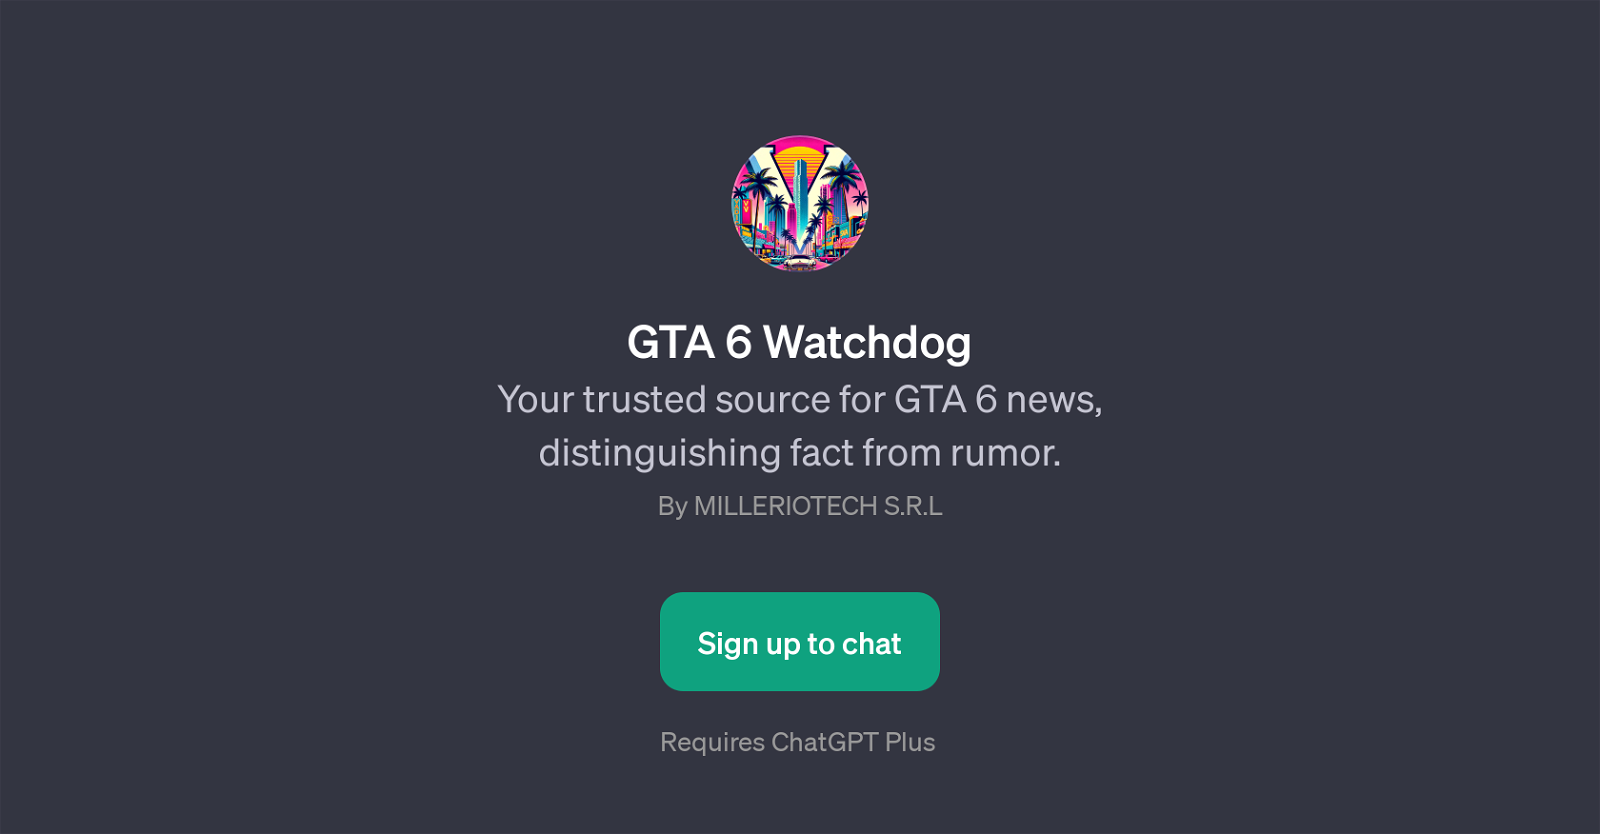 GTA 6 Watchdog website